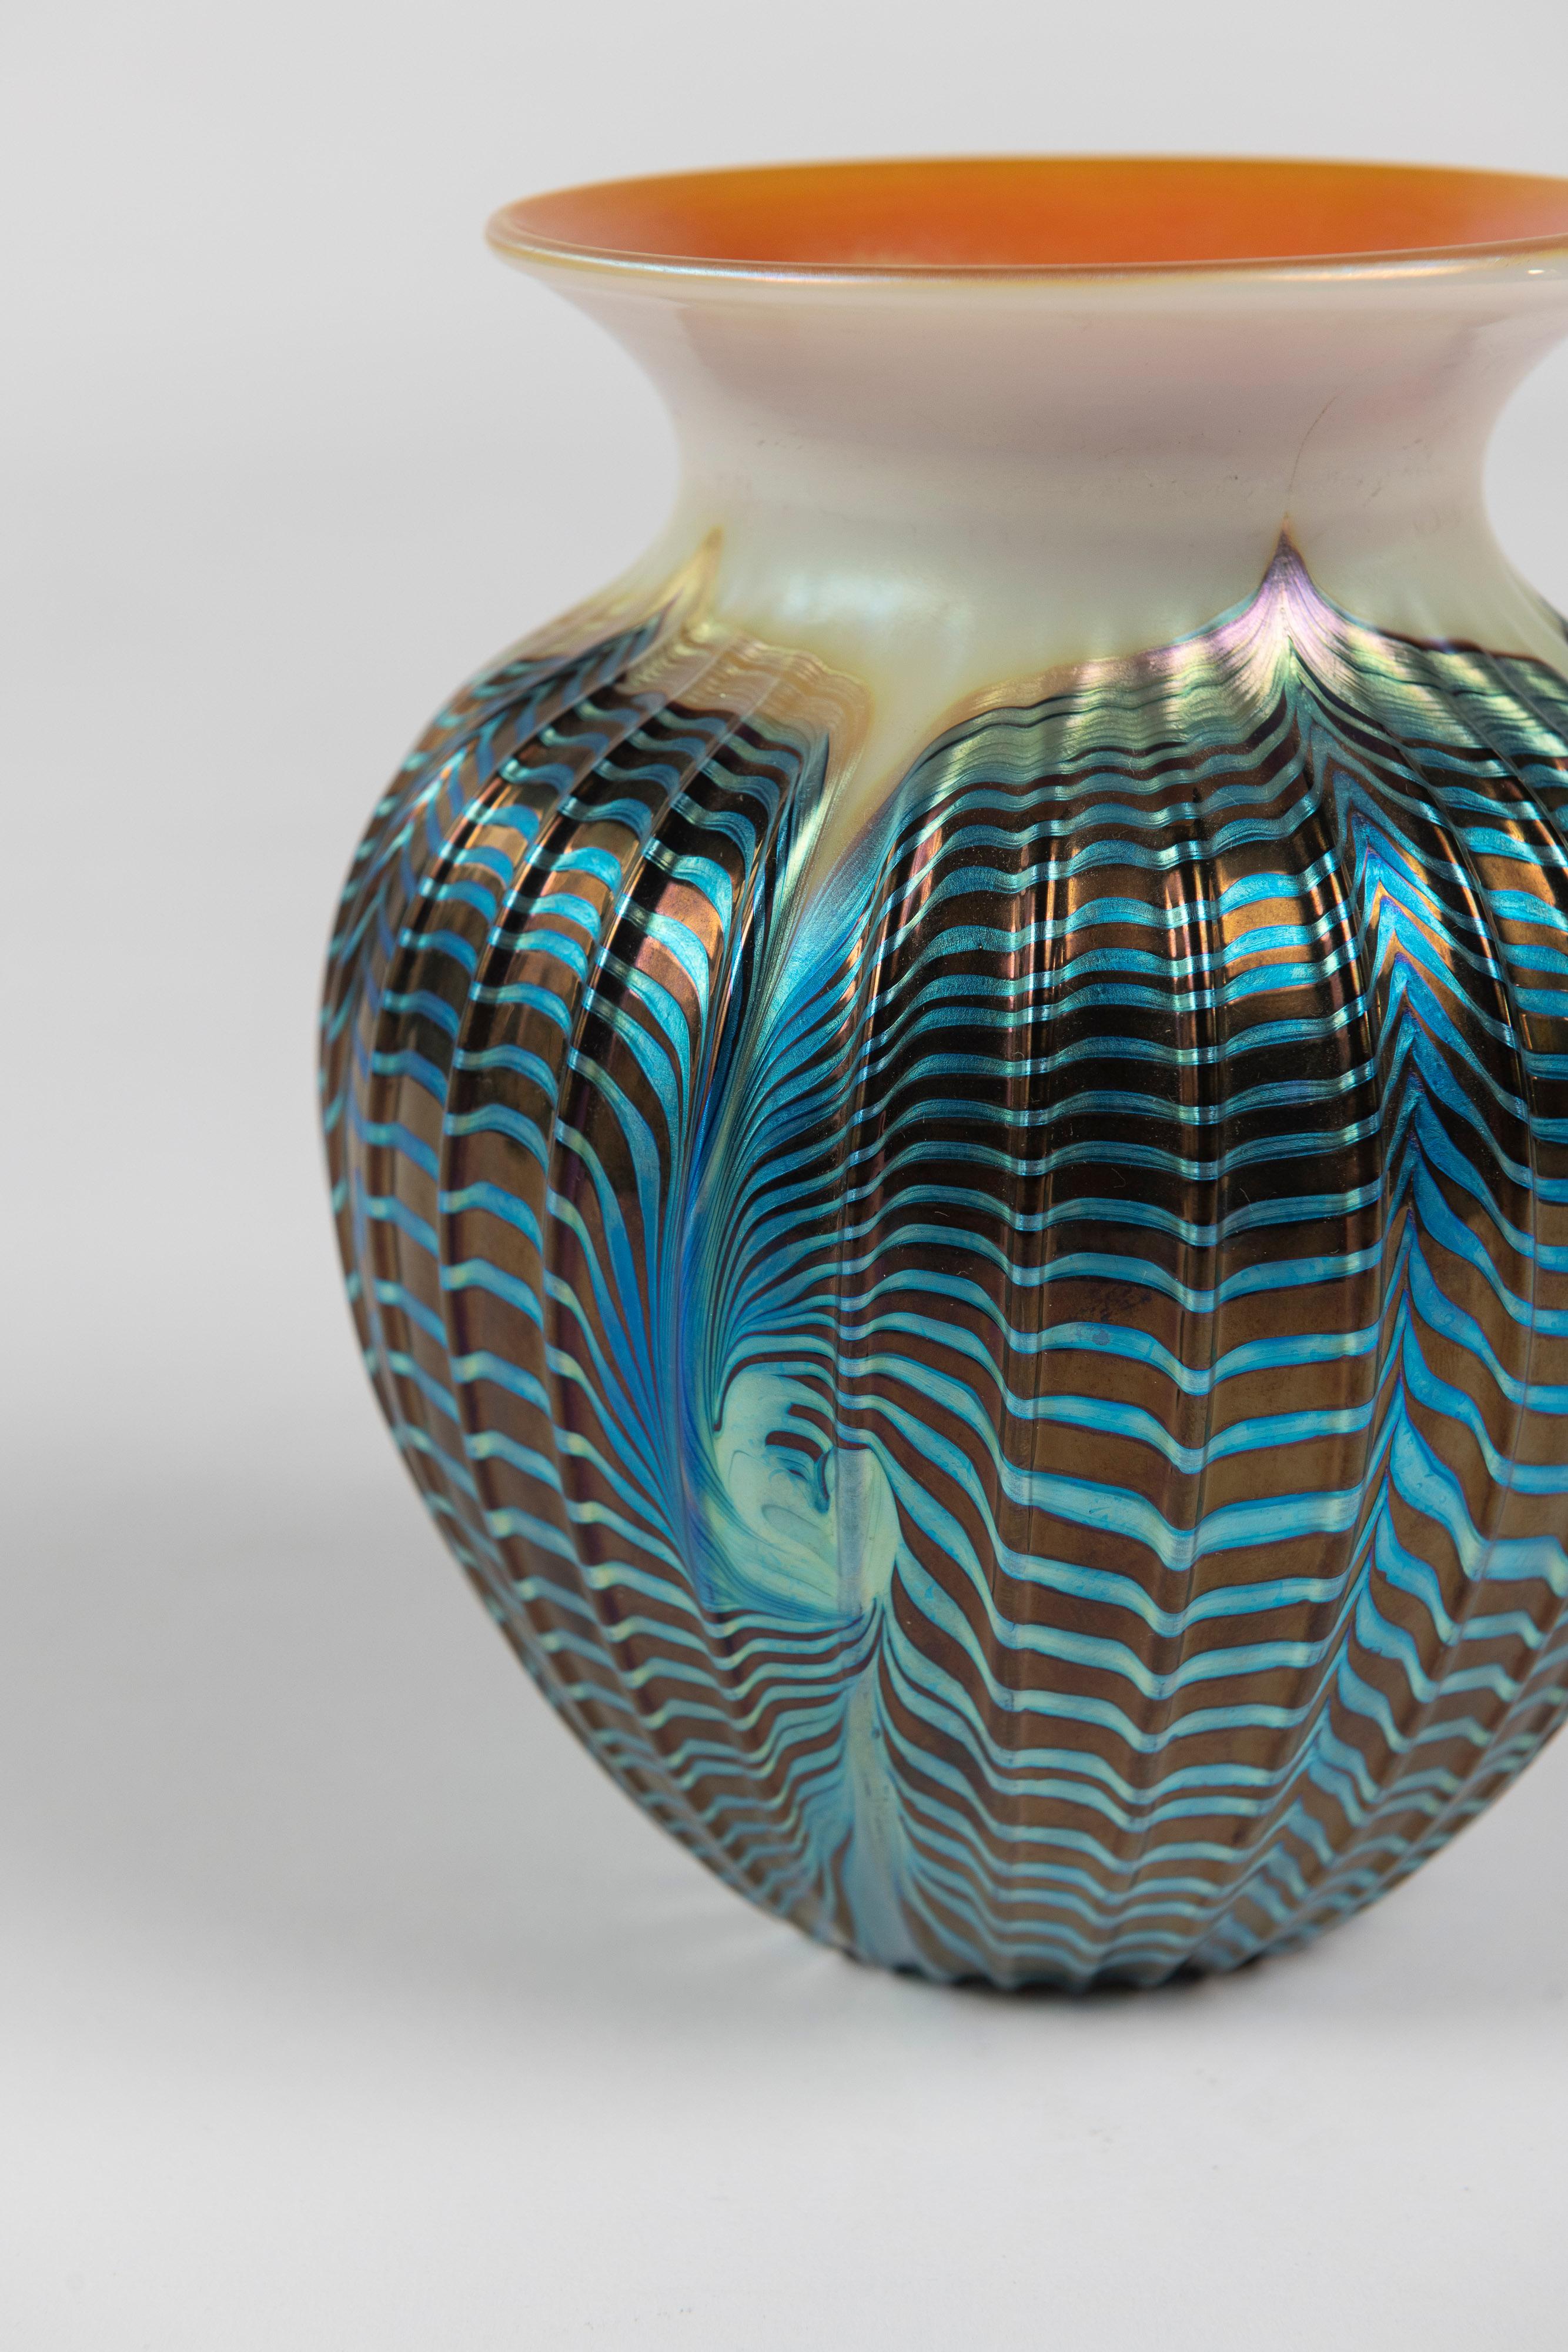 Multi-Iridescent Art Glass Rimmed Vase, Lundberg Studios, California, Signed In Good Condition For Sale In San Francisco, CA